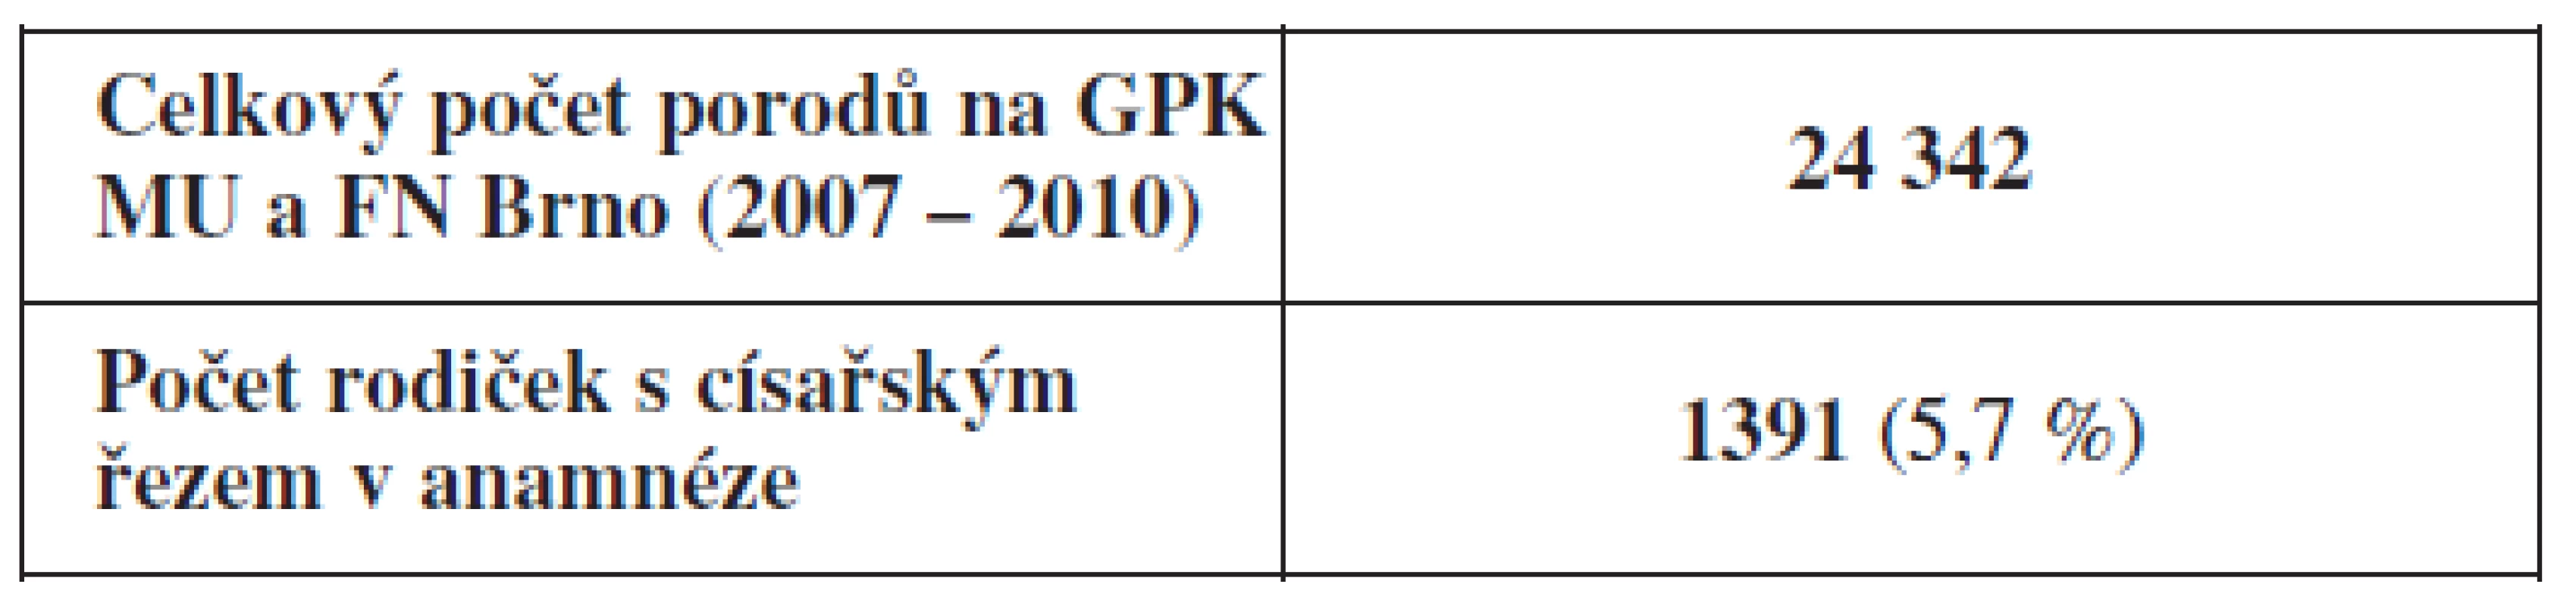 Celkový počet porodů na GPK MU a FN Brno v letech 2007–2010 a počet rodiček s císařským  řezem v anamnéze za stejné sledované období